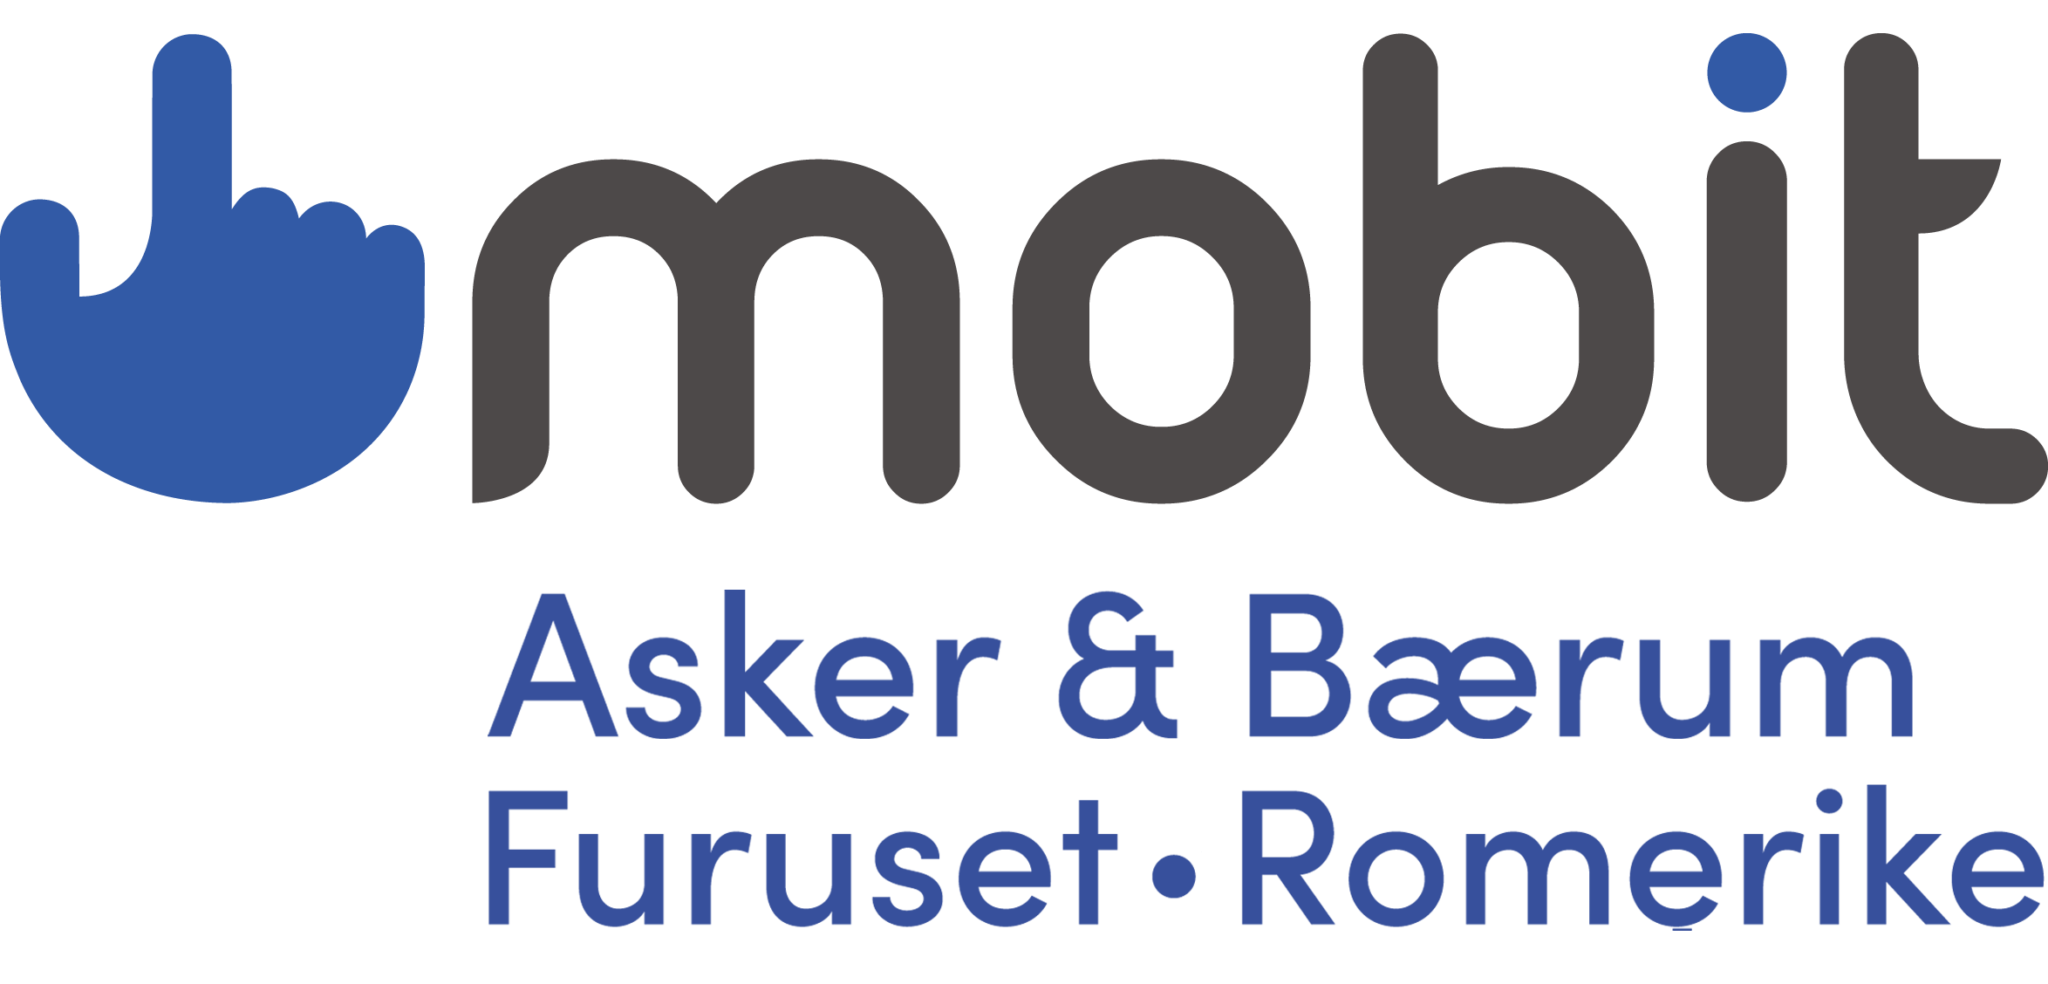 Mobit_Romerike_furuset_askerbaerum2-2048x984